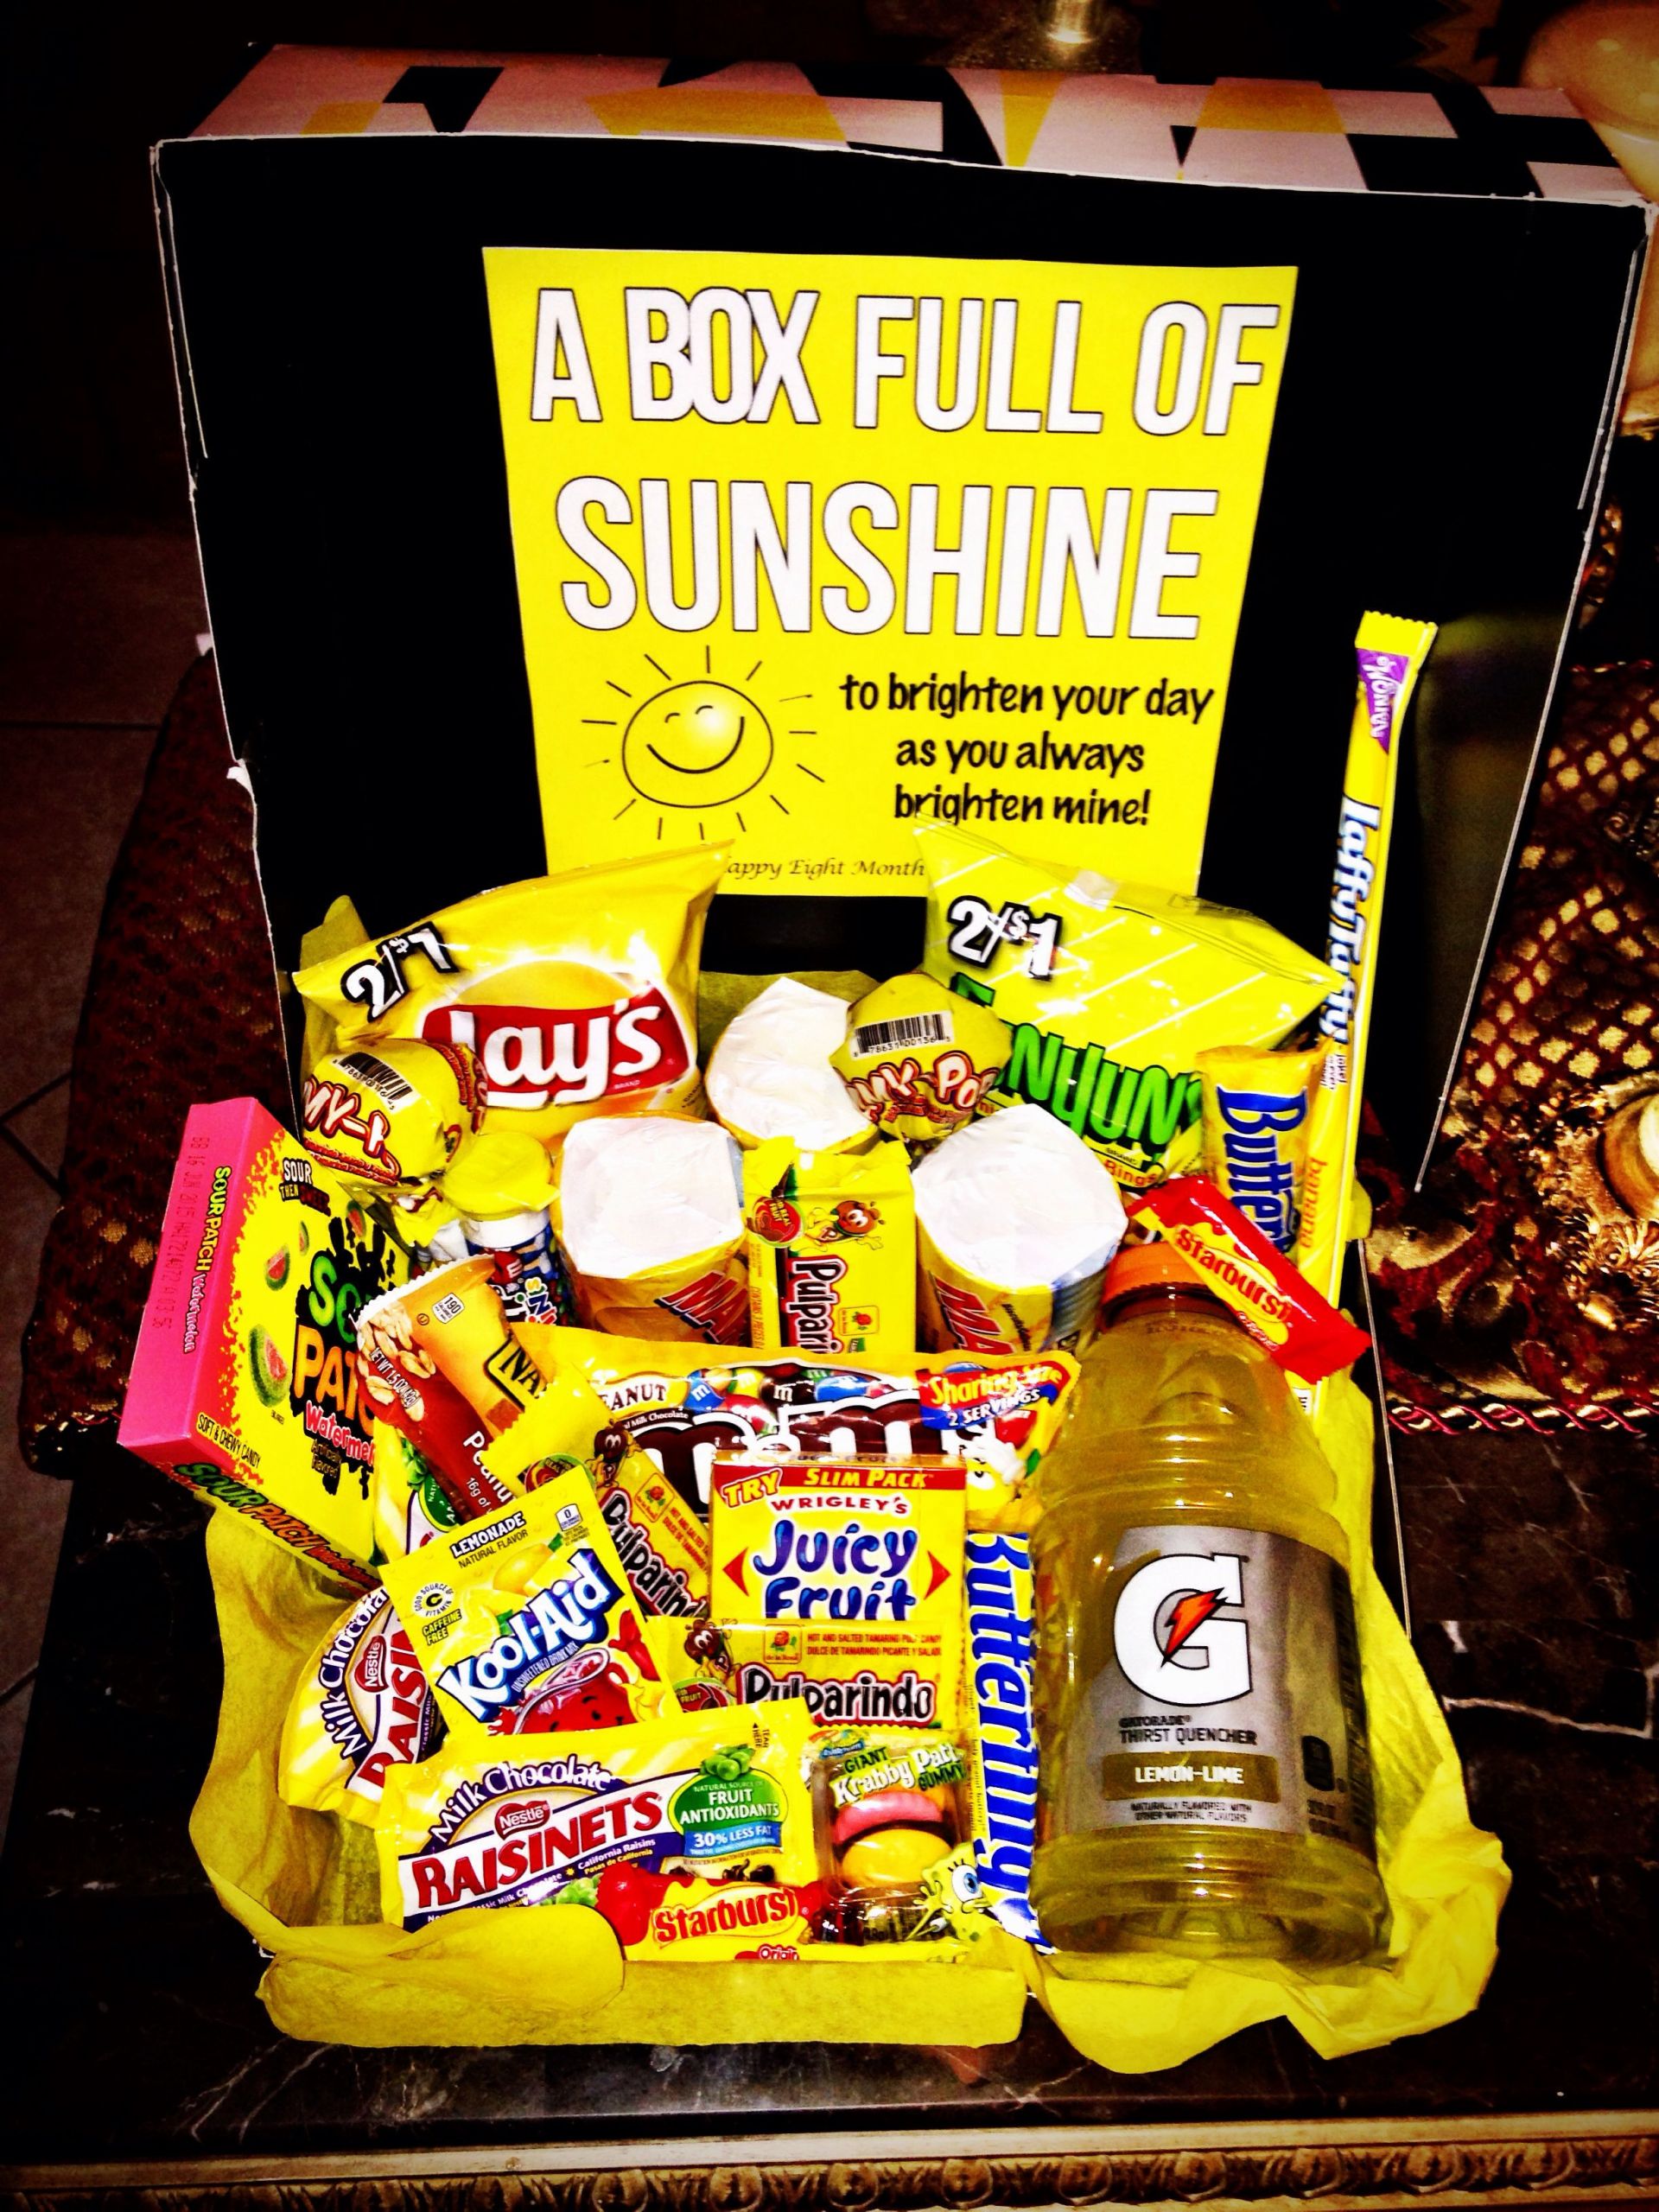 Cute Small Gift Ideas For Boyfriend
 "Box Full Sunshine" Gift For The Boyfriend